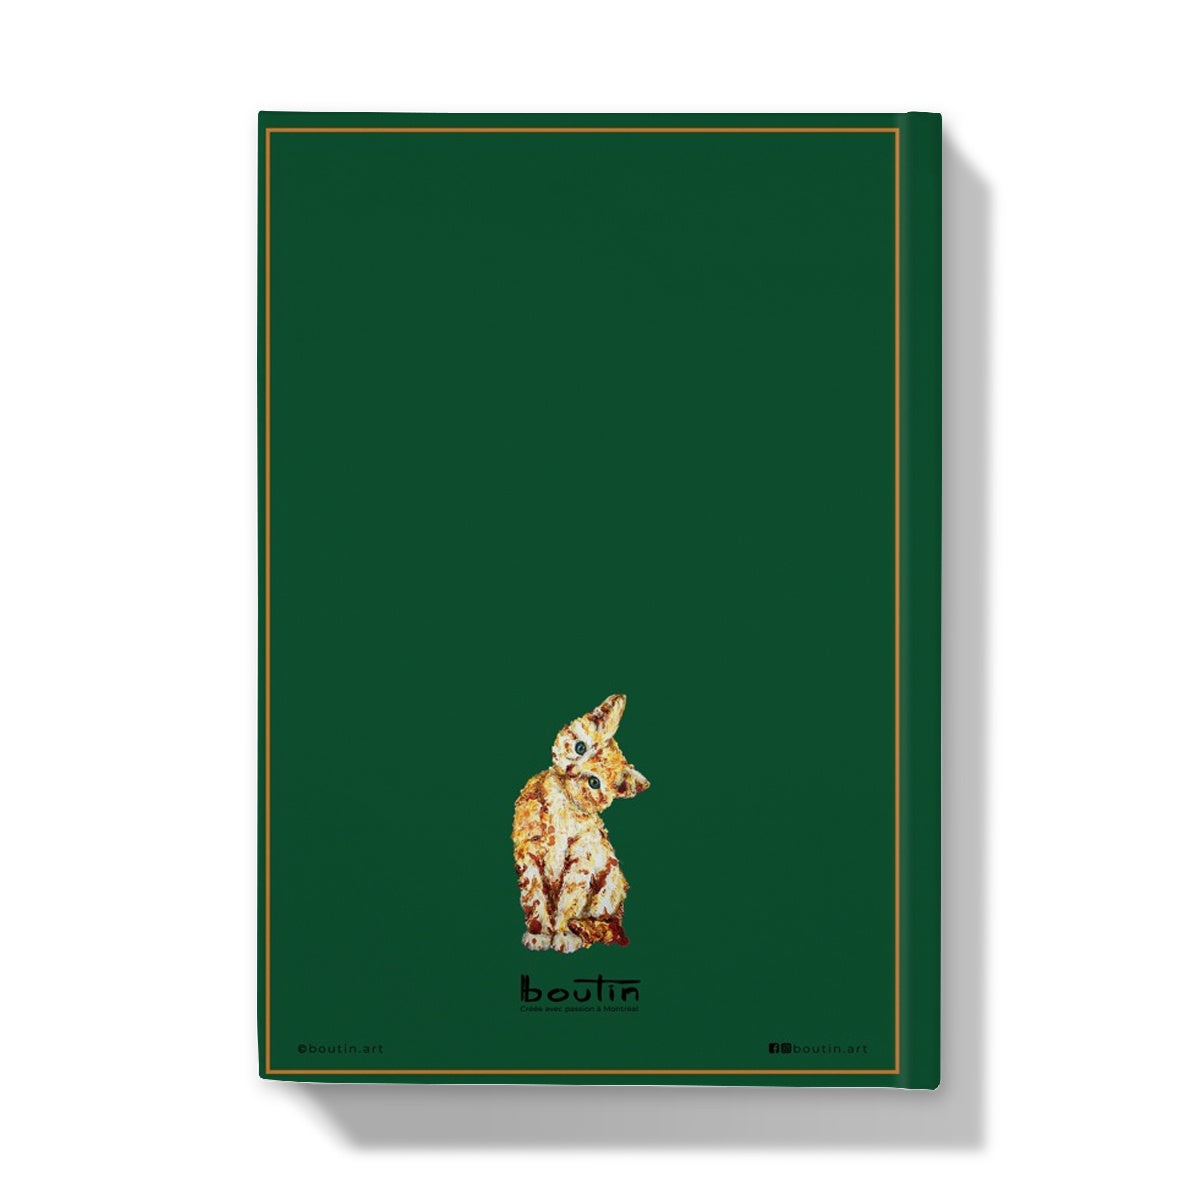 Sophia fir - Notebook by the artist Boutin